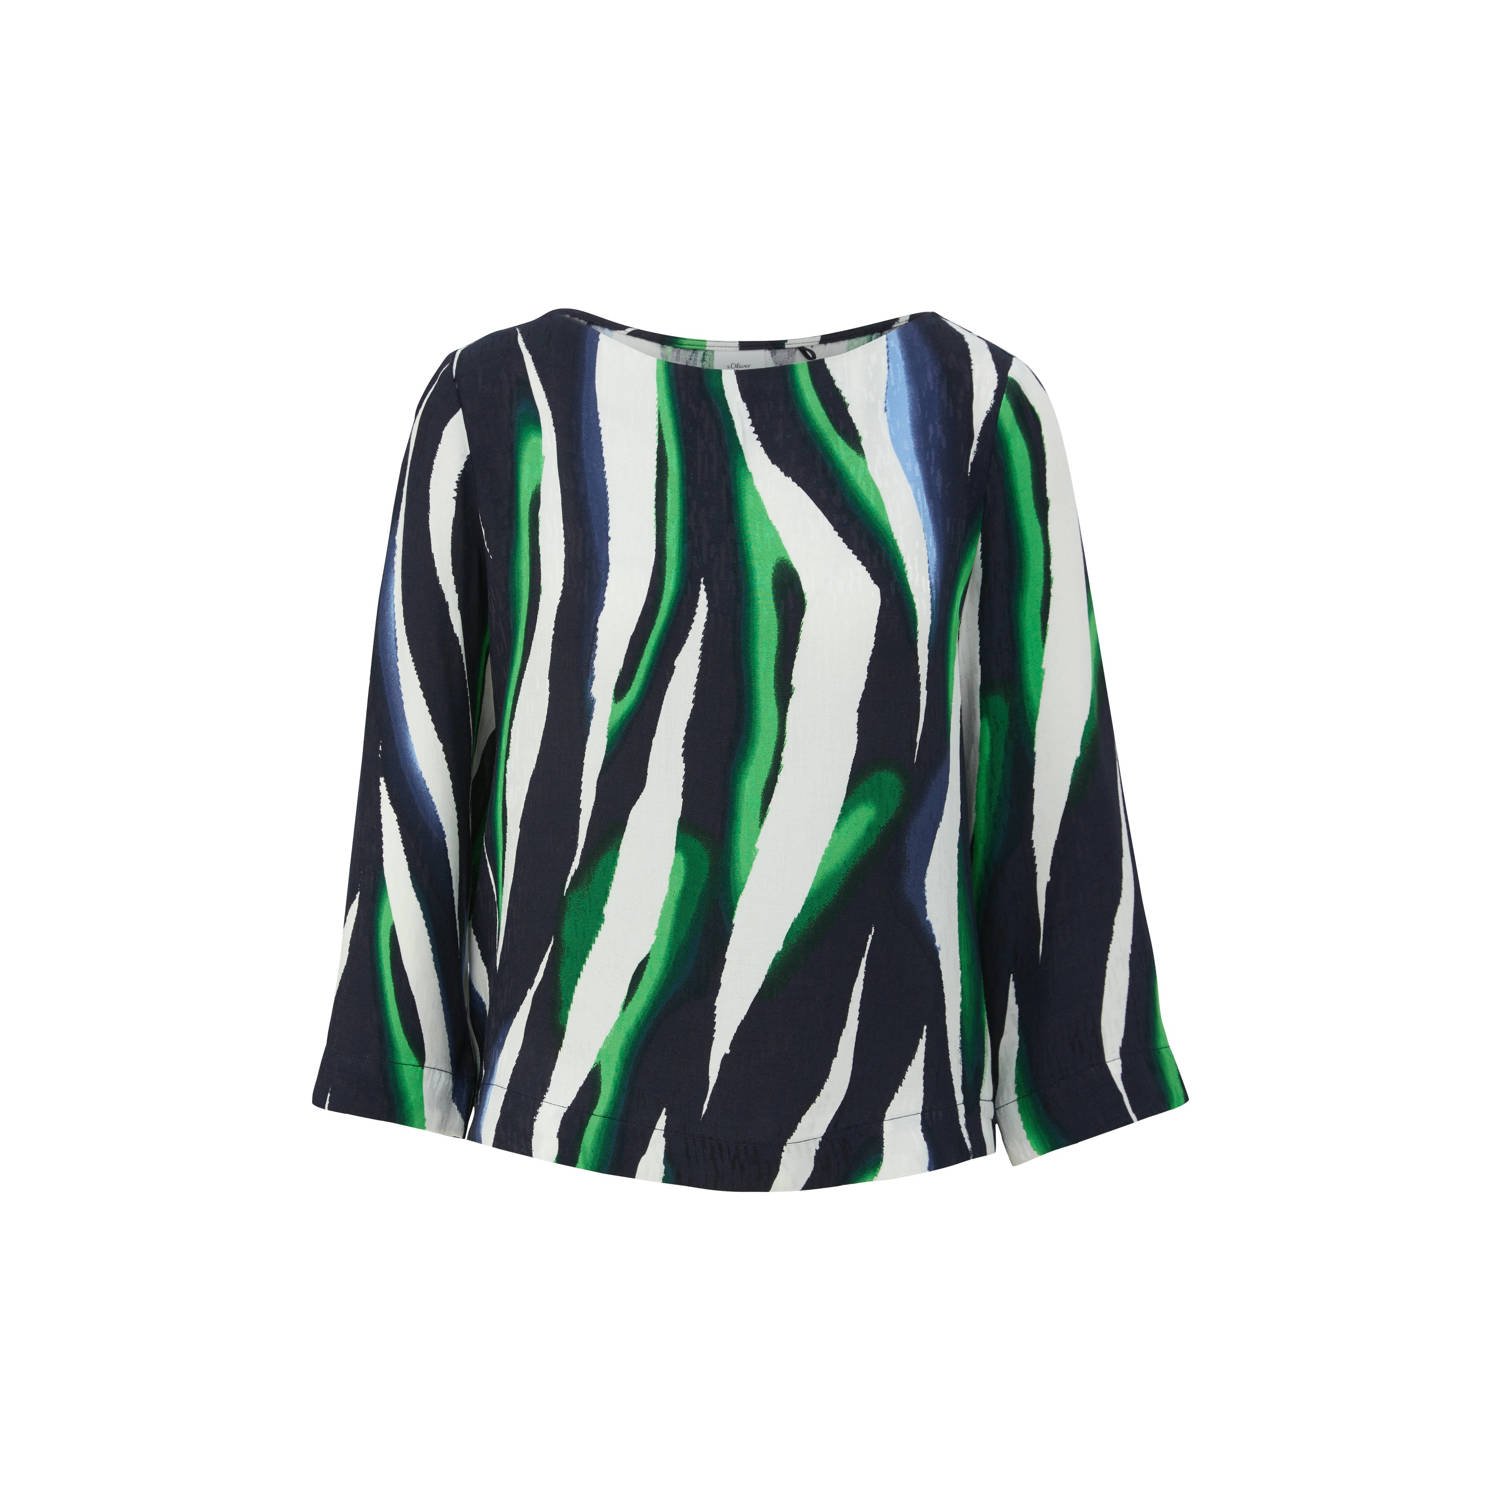 S.Oliver BLACK LABEL blousetop met all over print marine groen